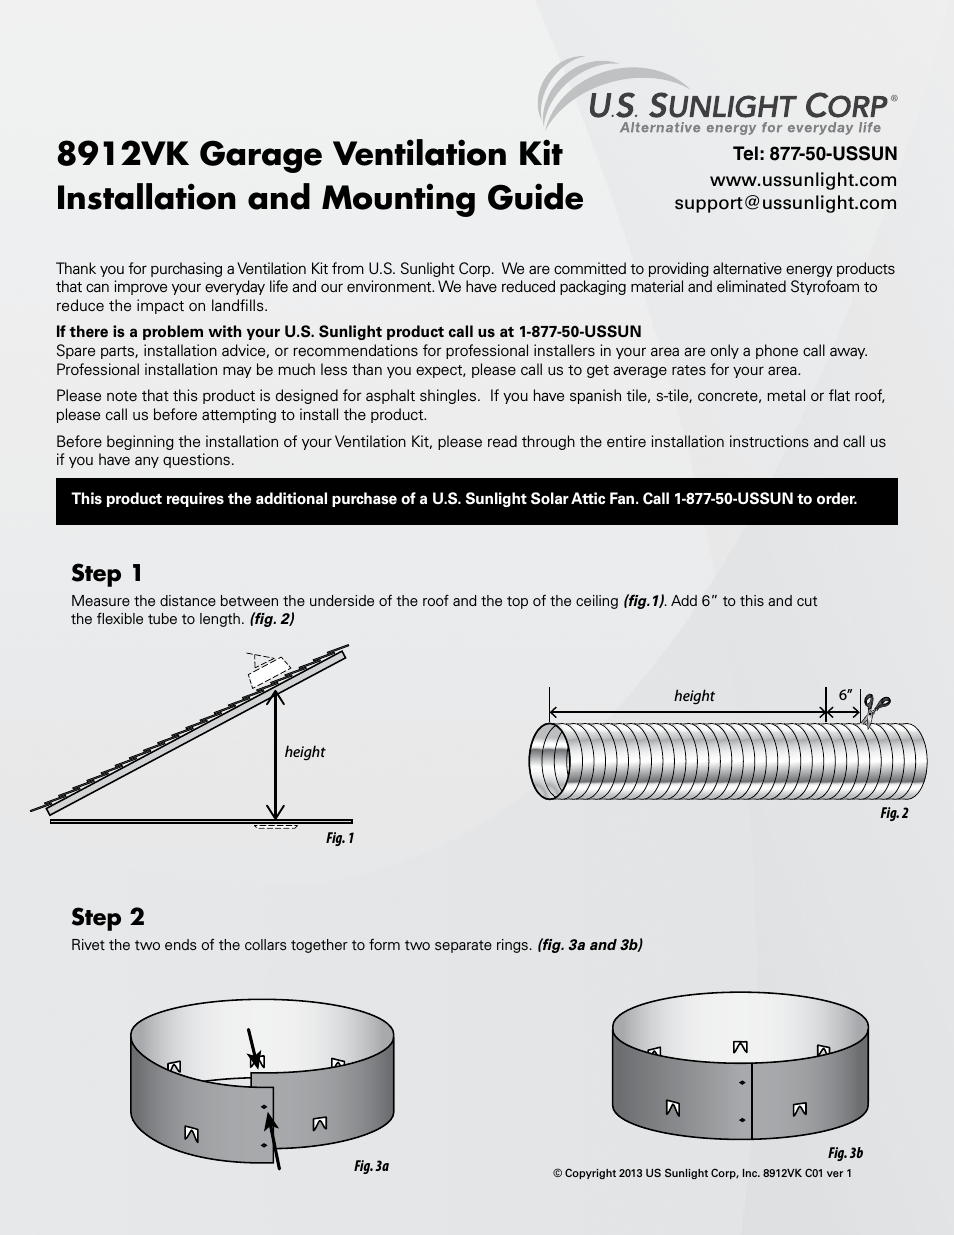 9912TR Multi-Purpose Ventilation Kit